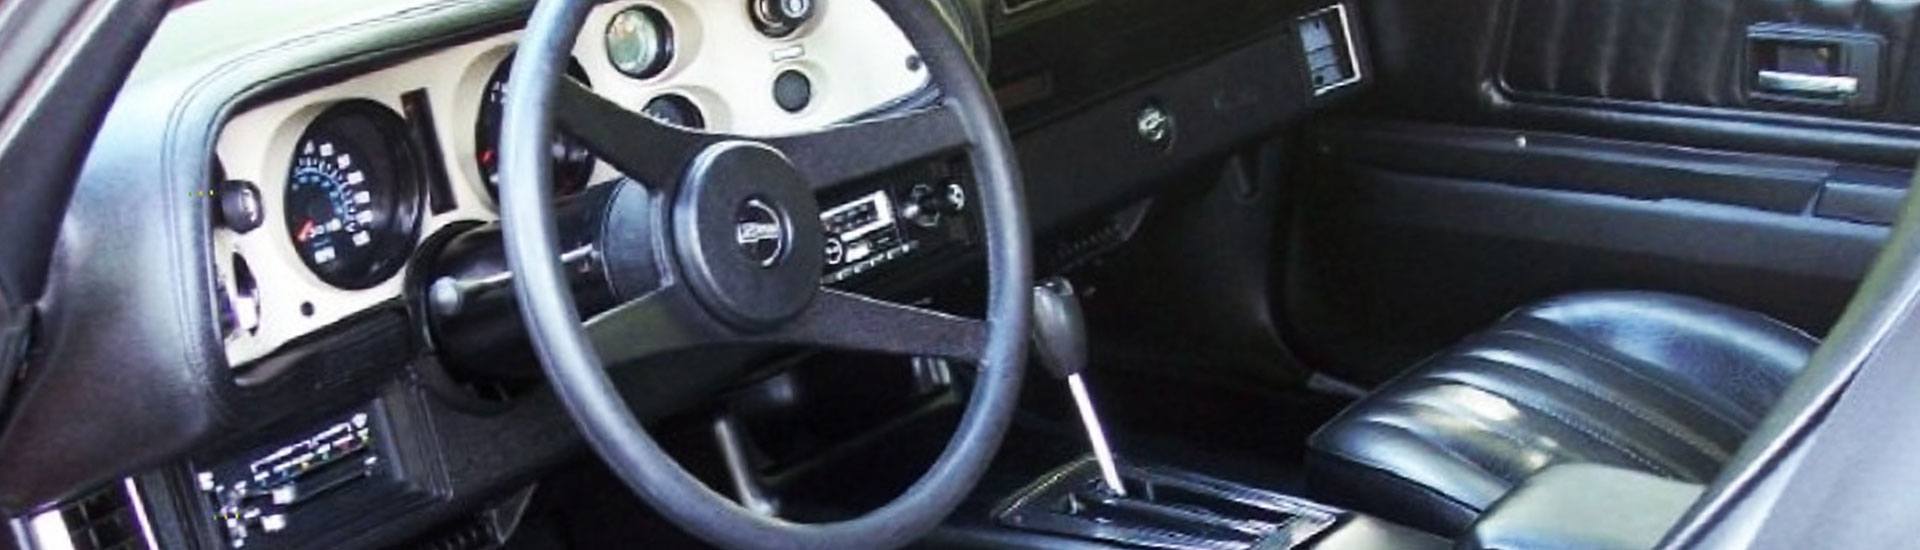 1977 Chevrolet Camaro Dash Kits